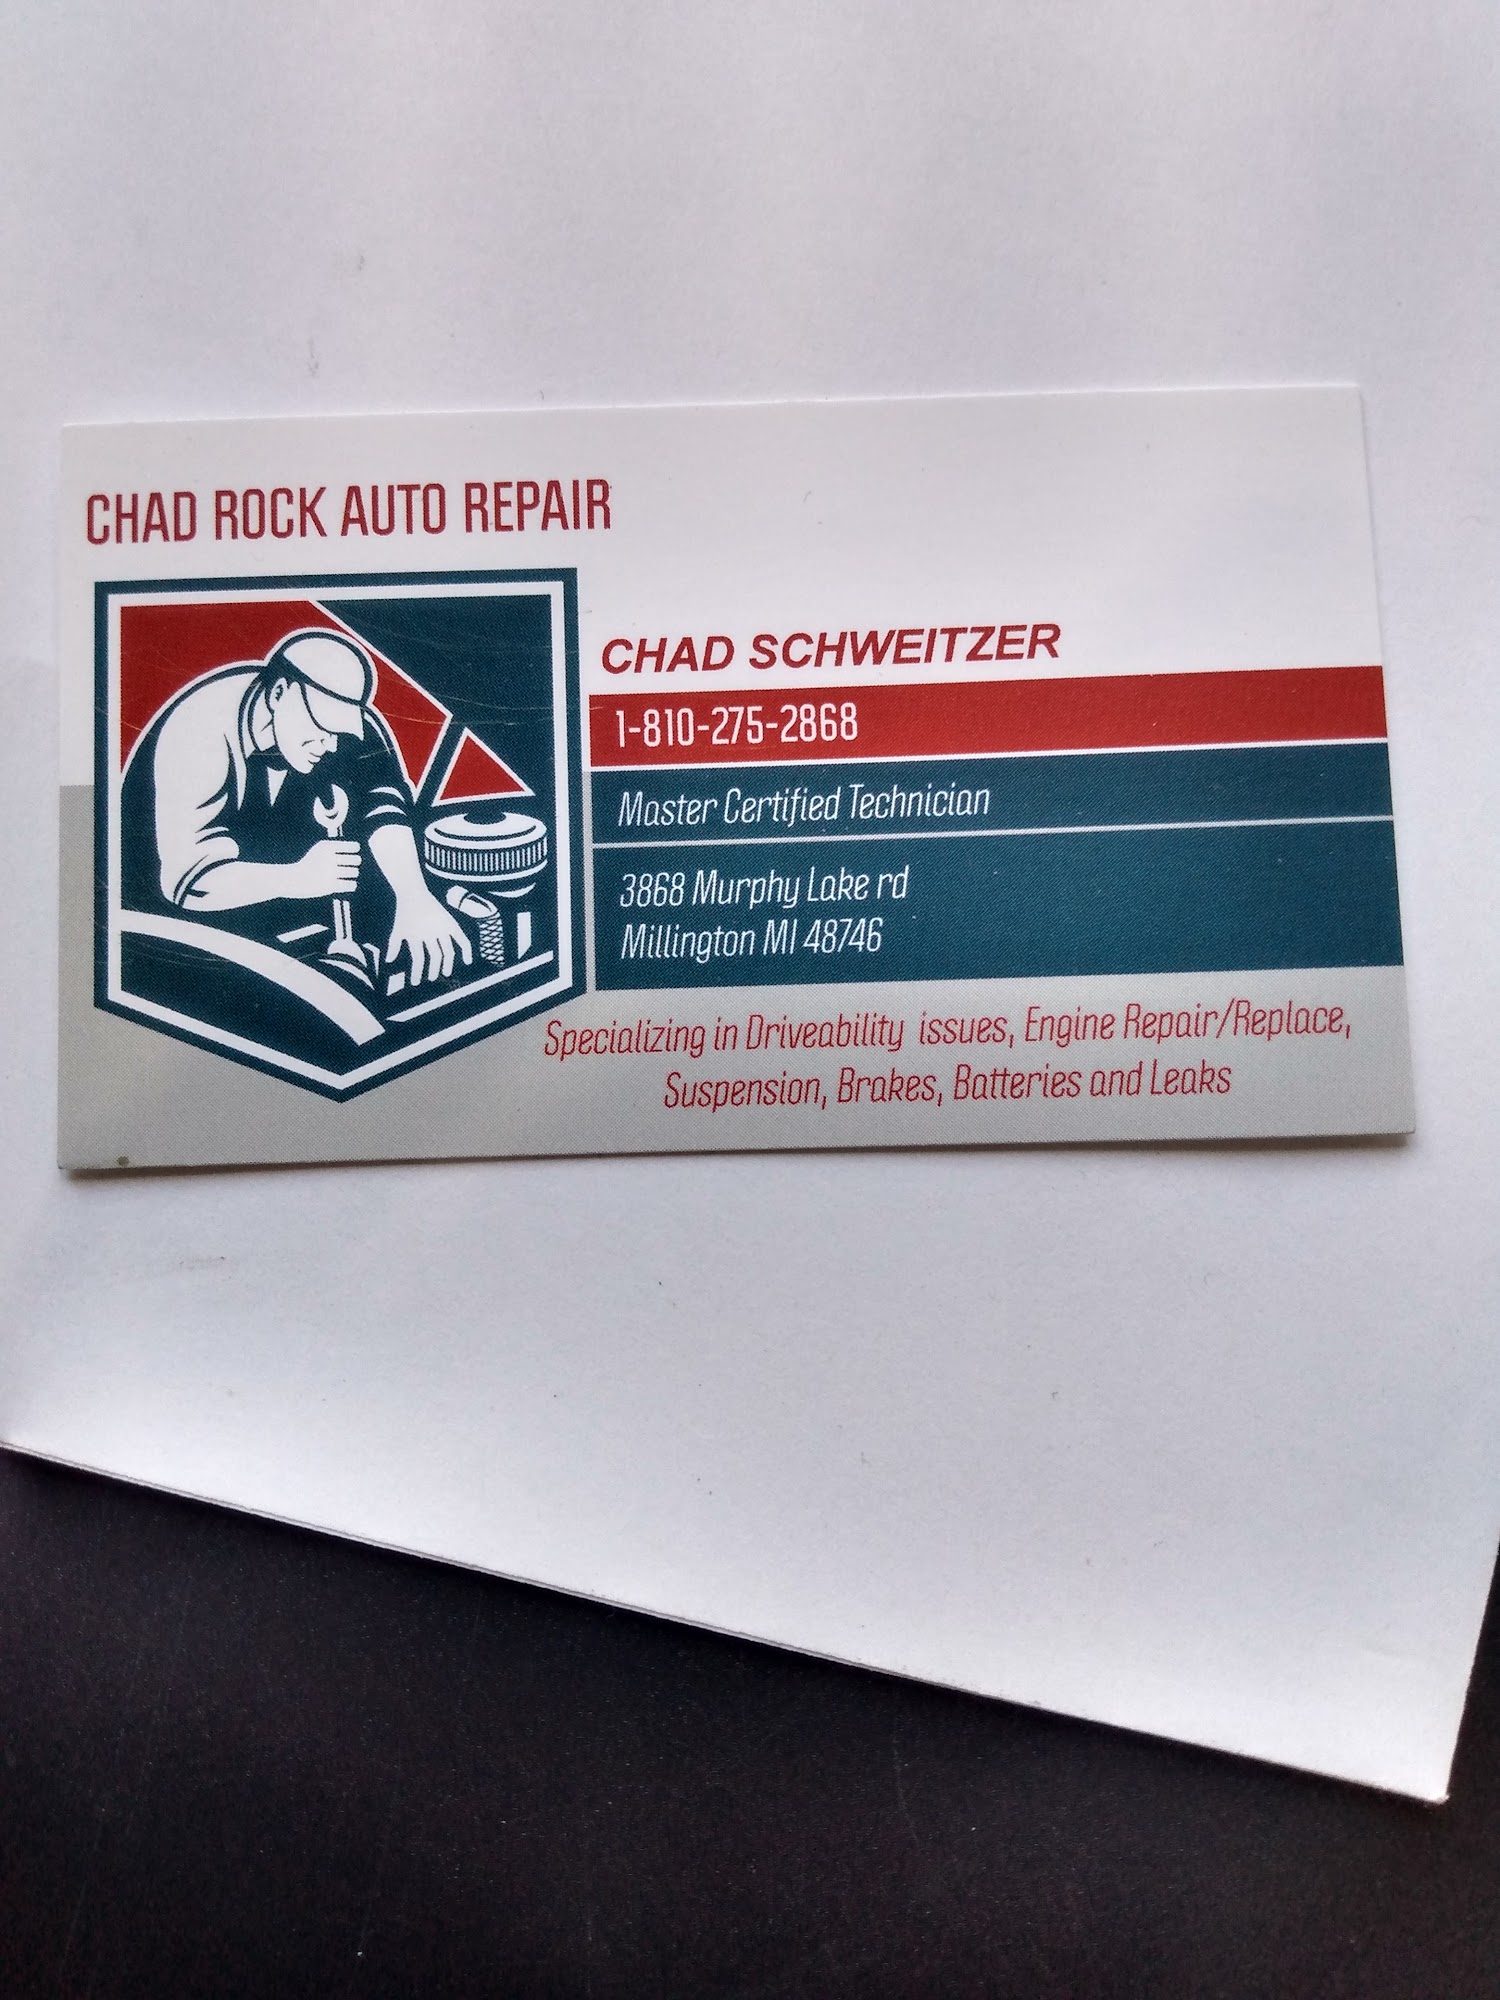 Chad Rock Auto Repair 3868 Murphy Lake Rd, Millington Michigan 48746